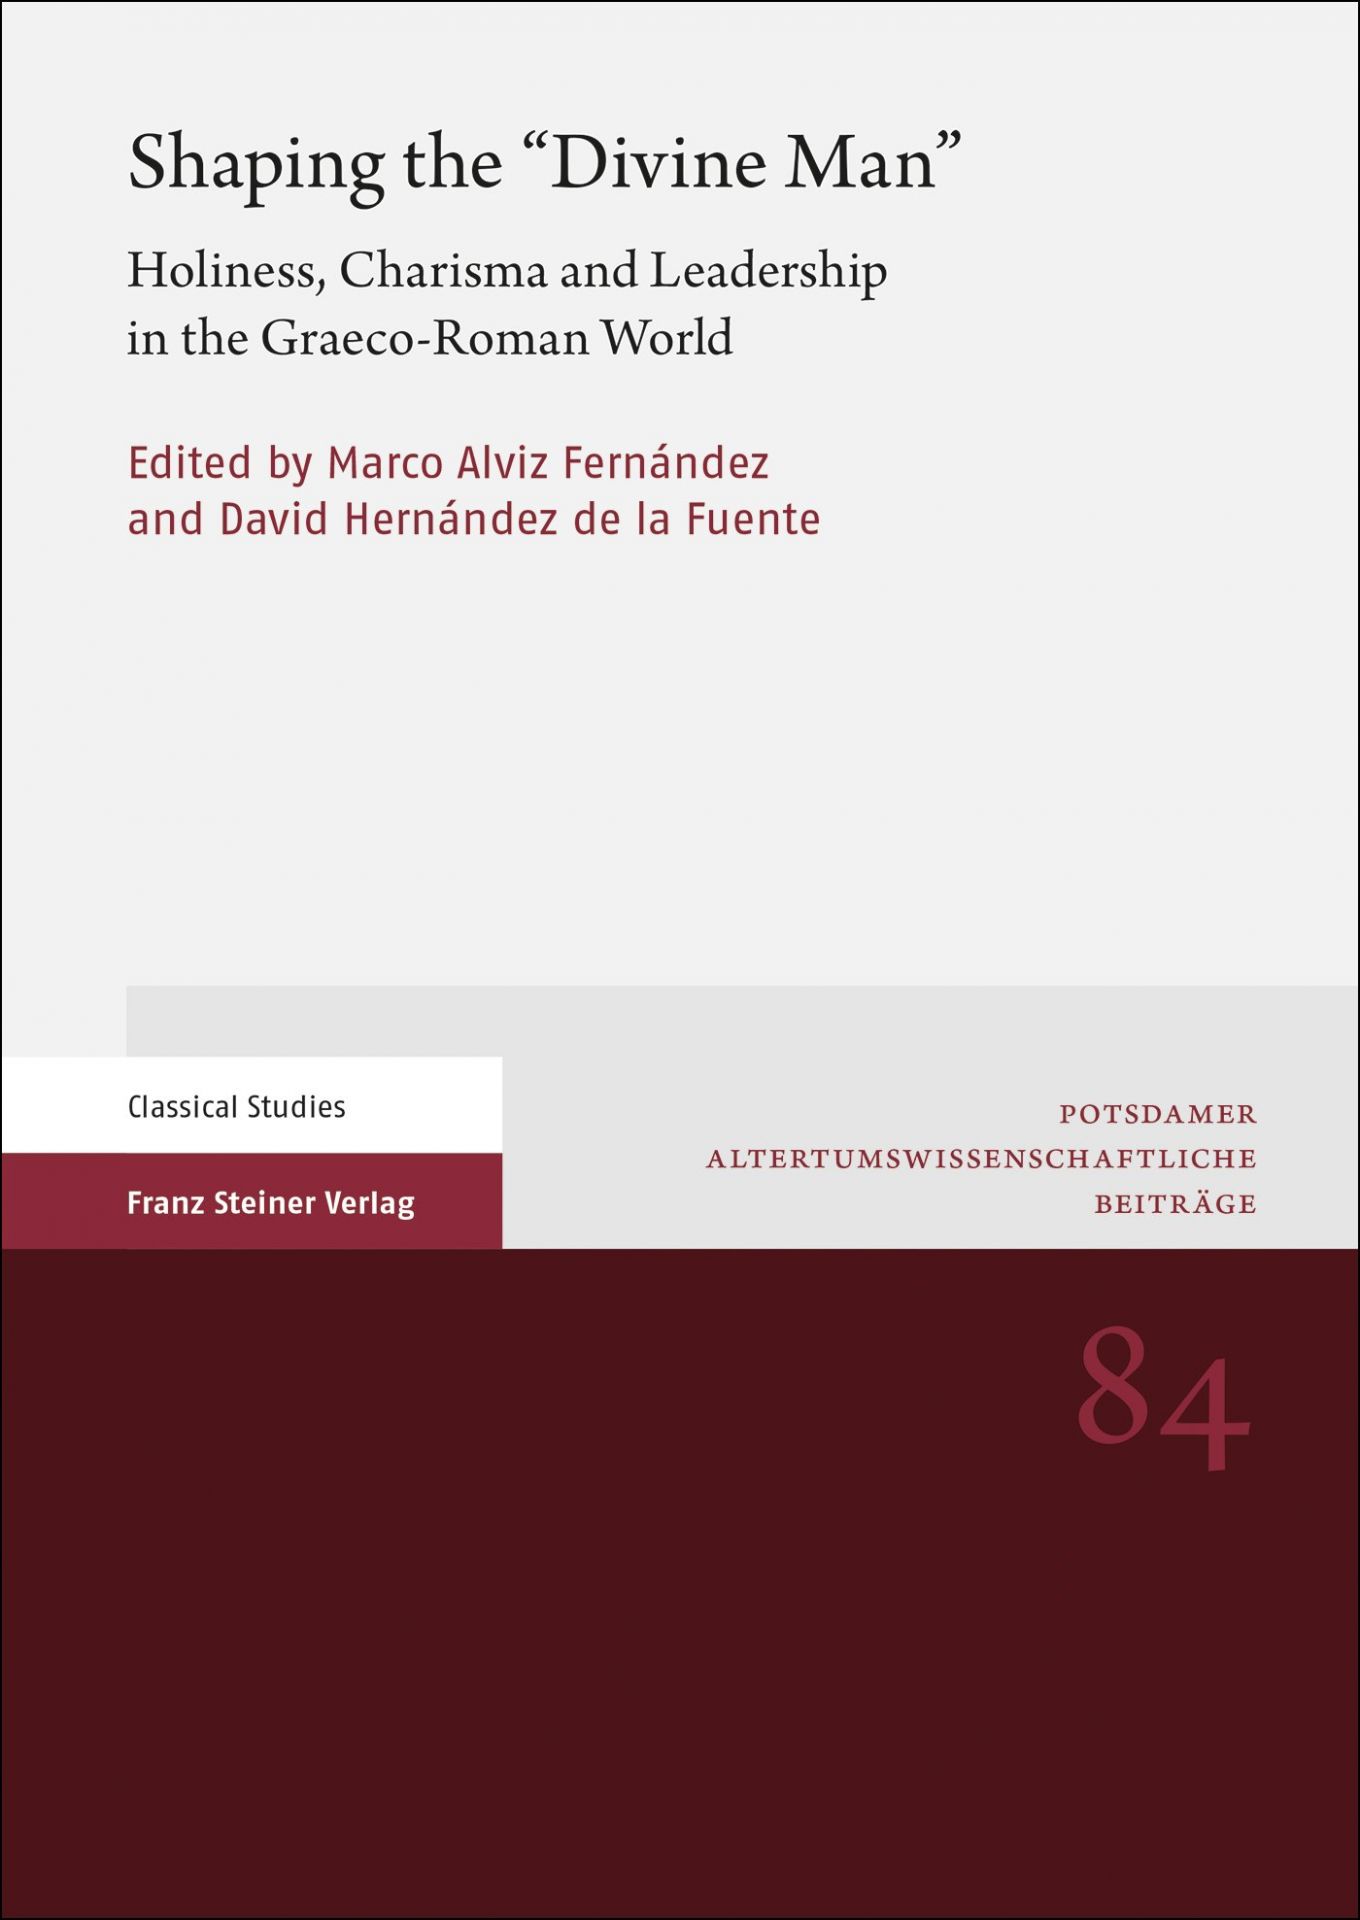 Imagen de portada del libro Shaping the "divine man" : holiness, charisma and leadership in the Graeco-Roman world